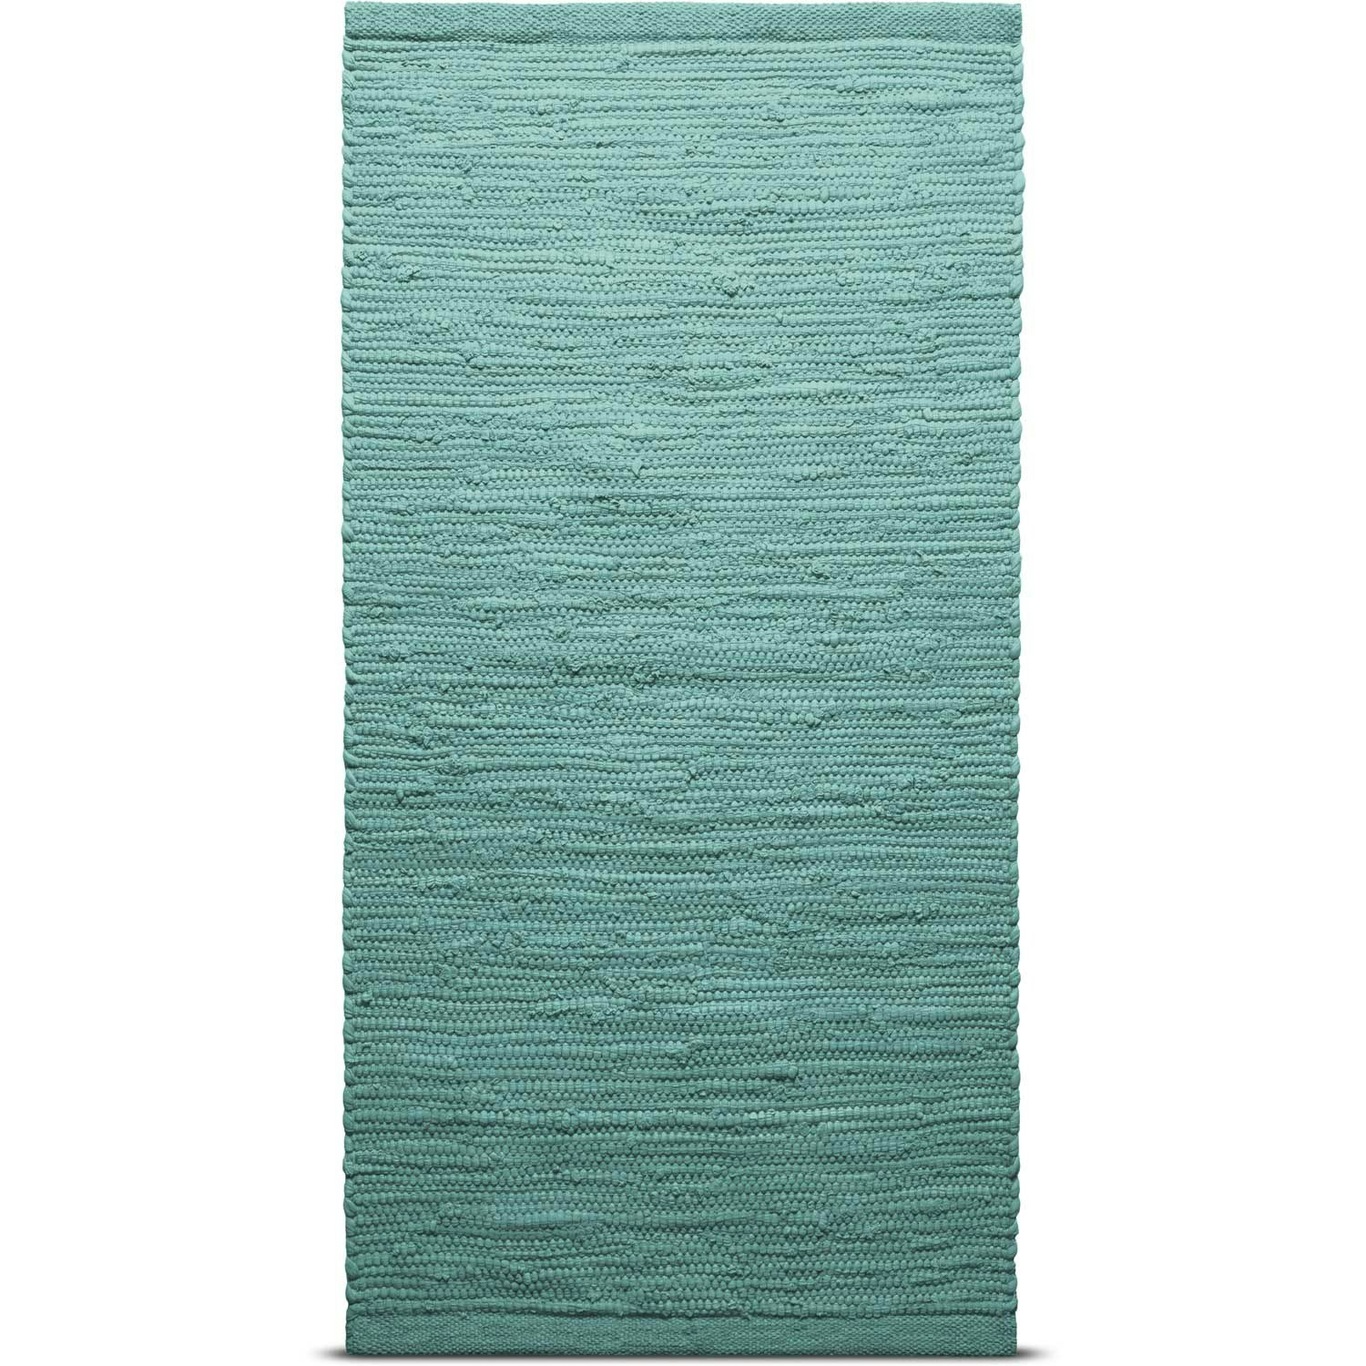 Cotton Vloerkleed Dusty Jade, 170x240 cm